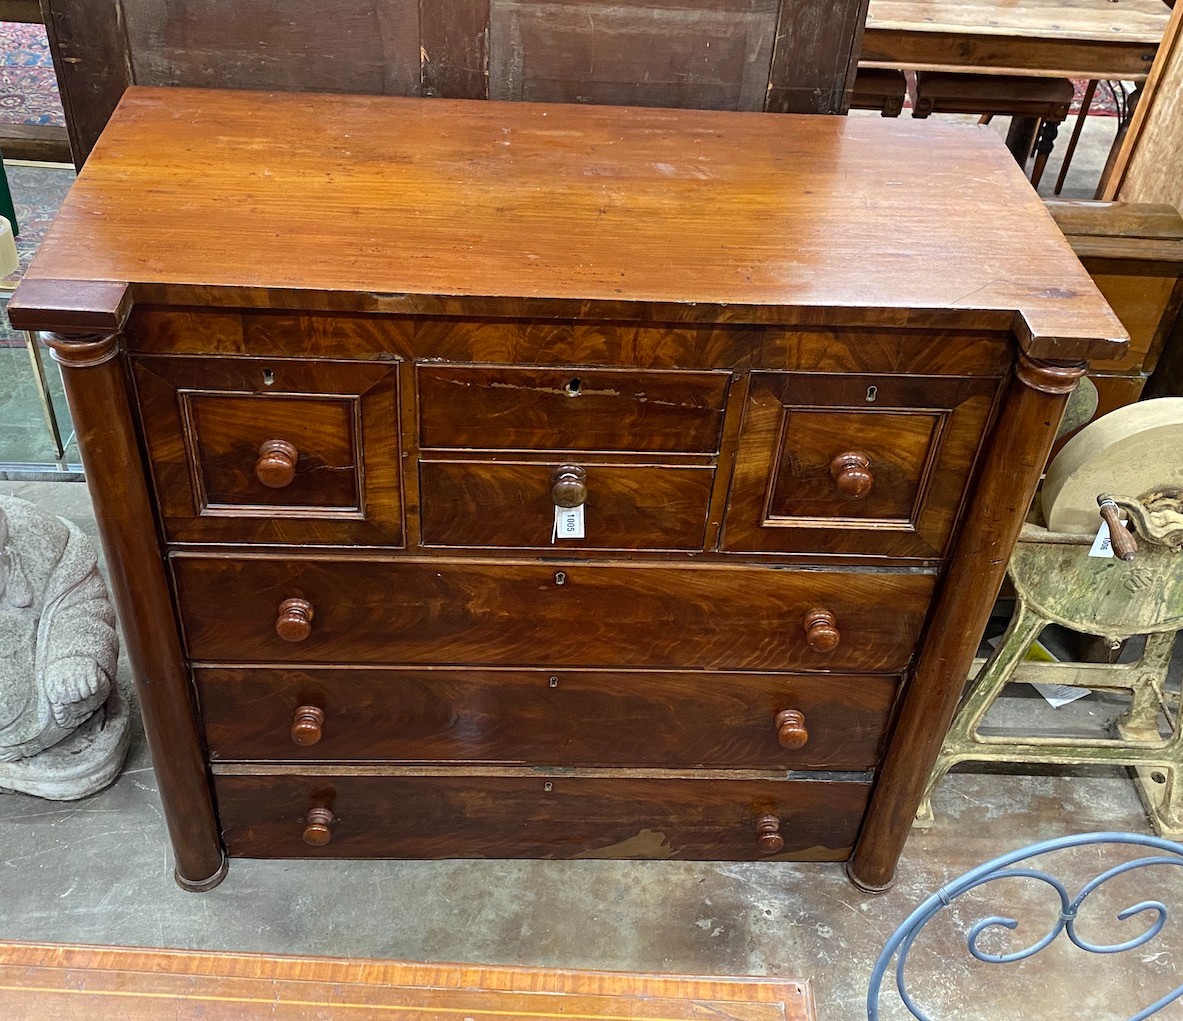 A mid Victorian mahogany chest, width 125cm, depth 60cm, height 113cm